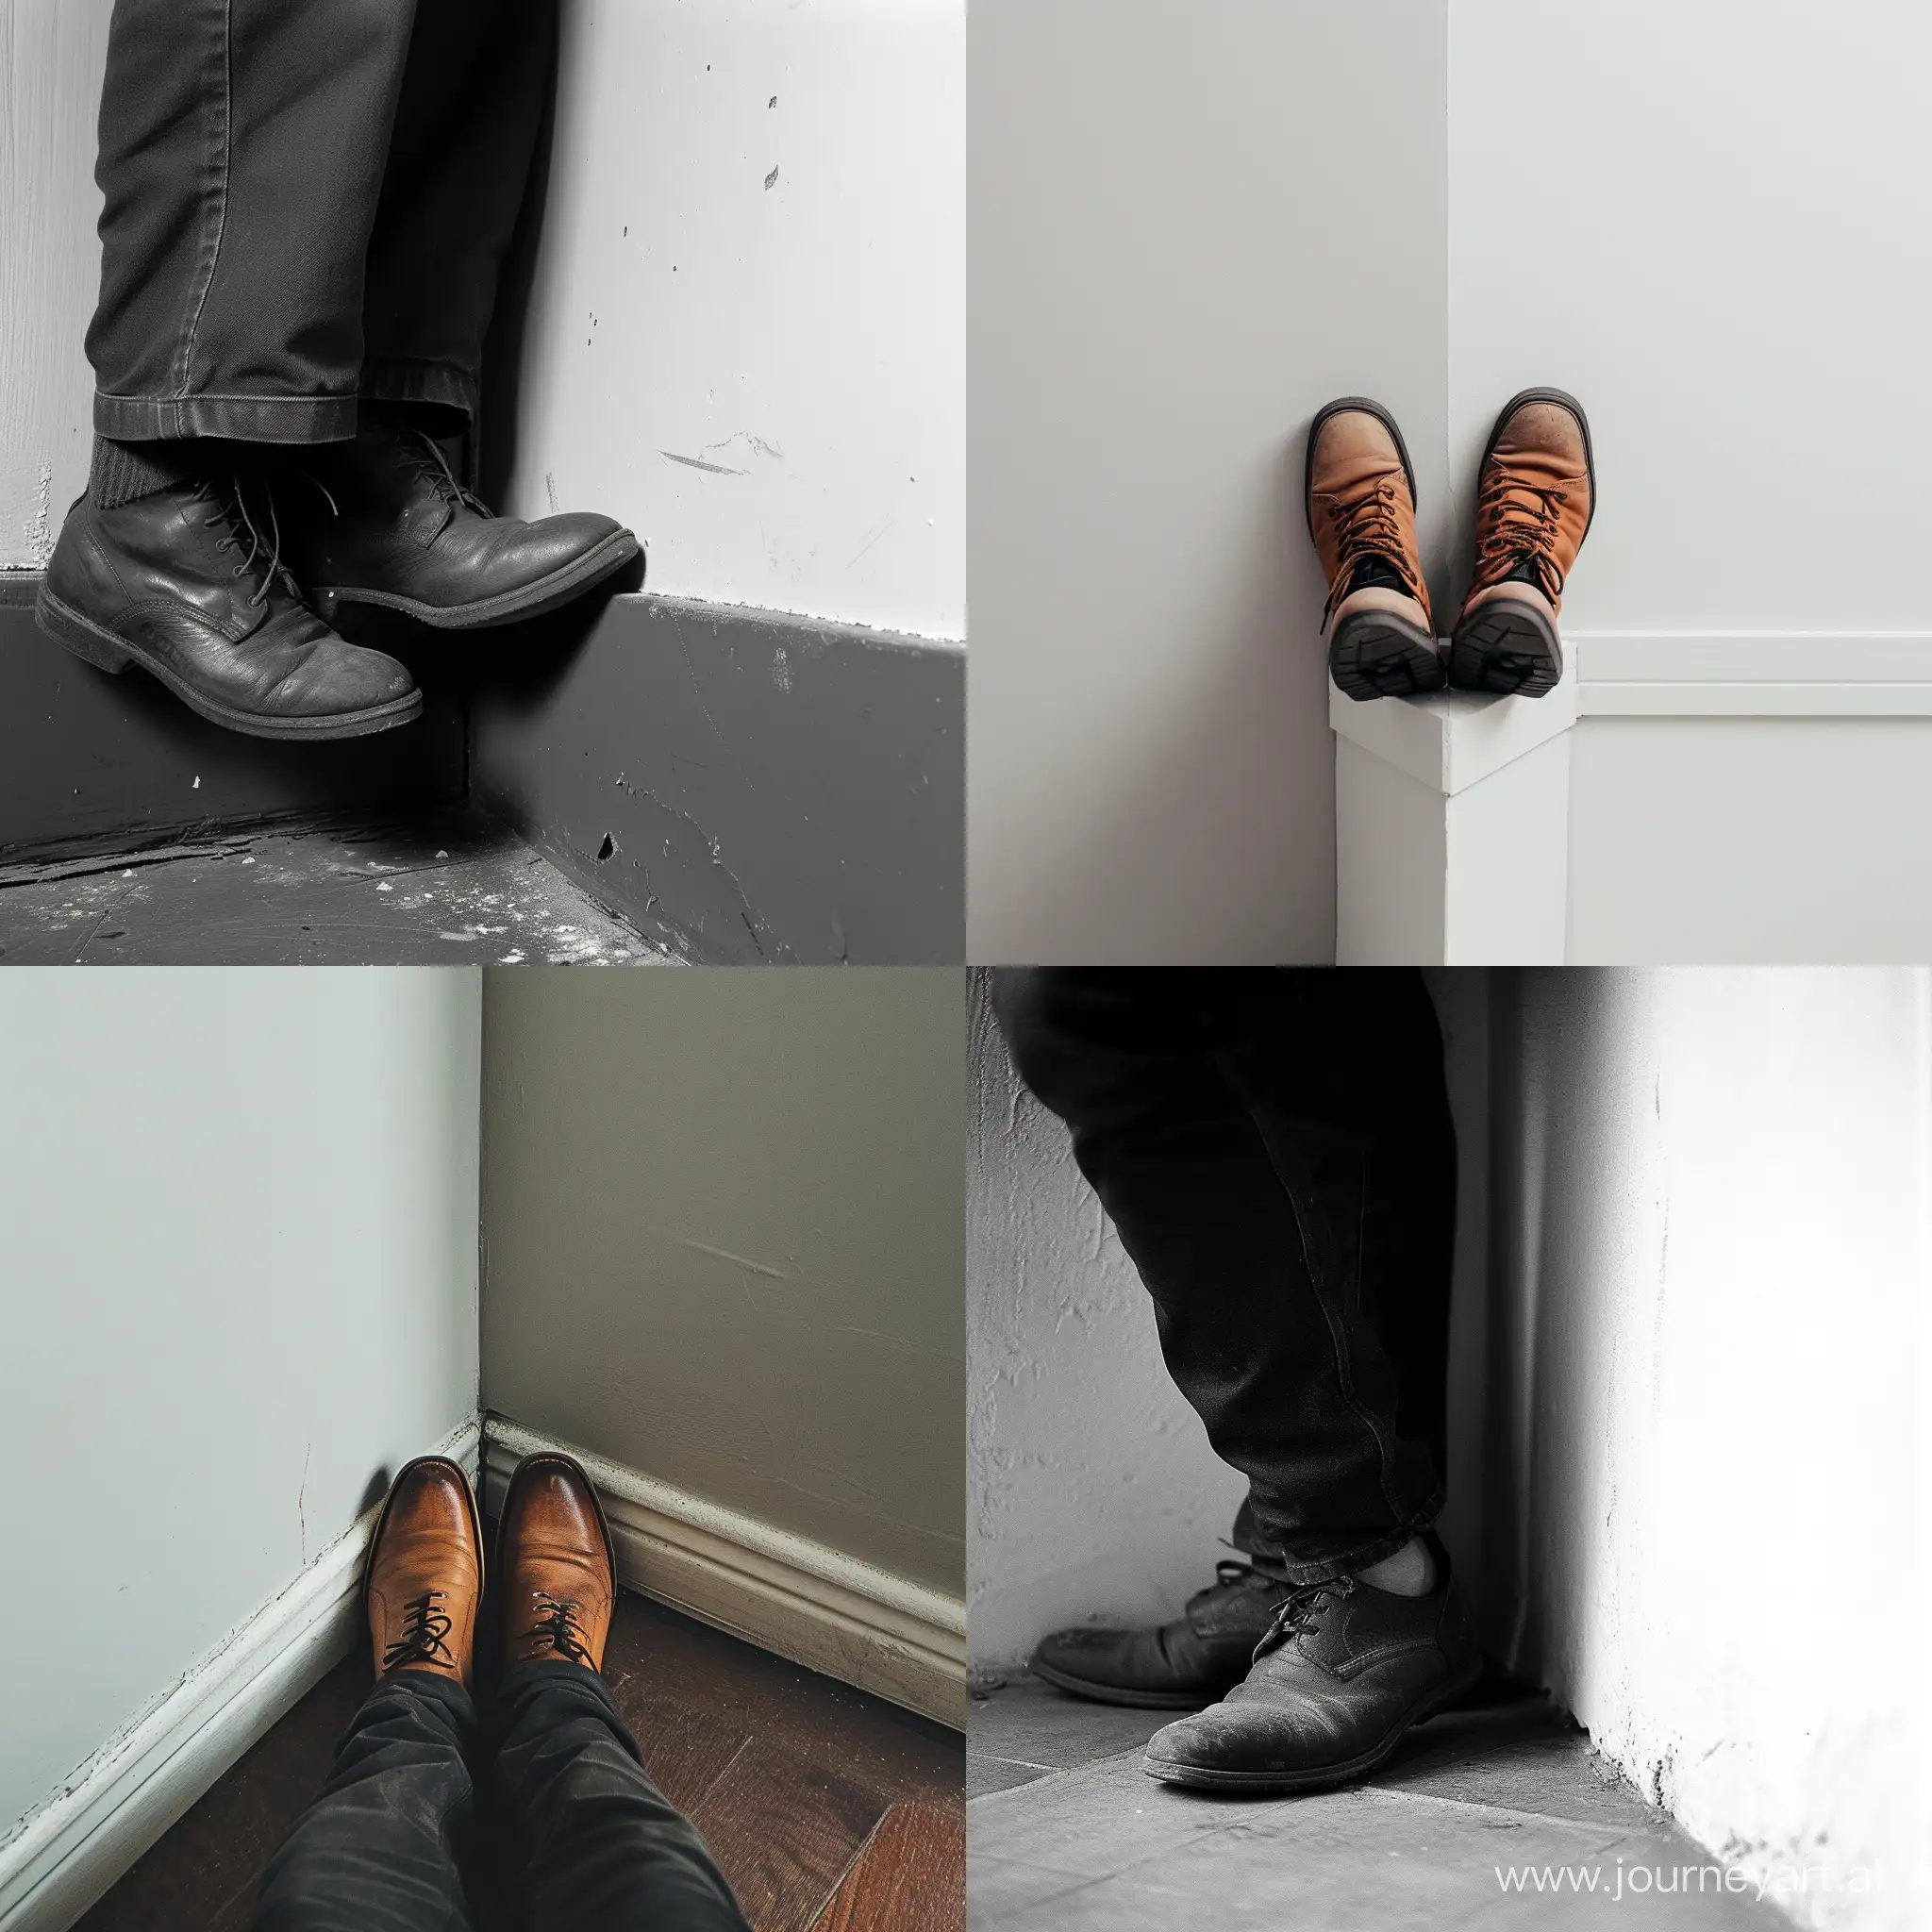 A man's feet hit on the wall corner